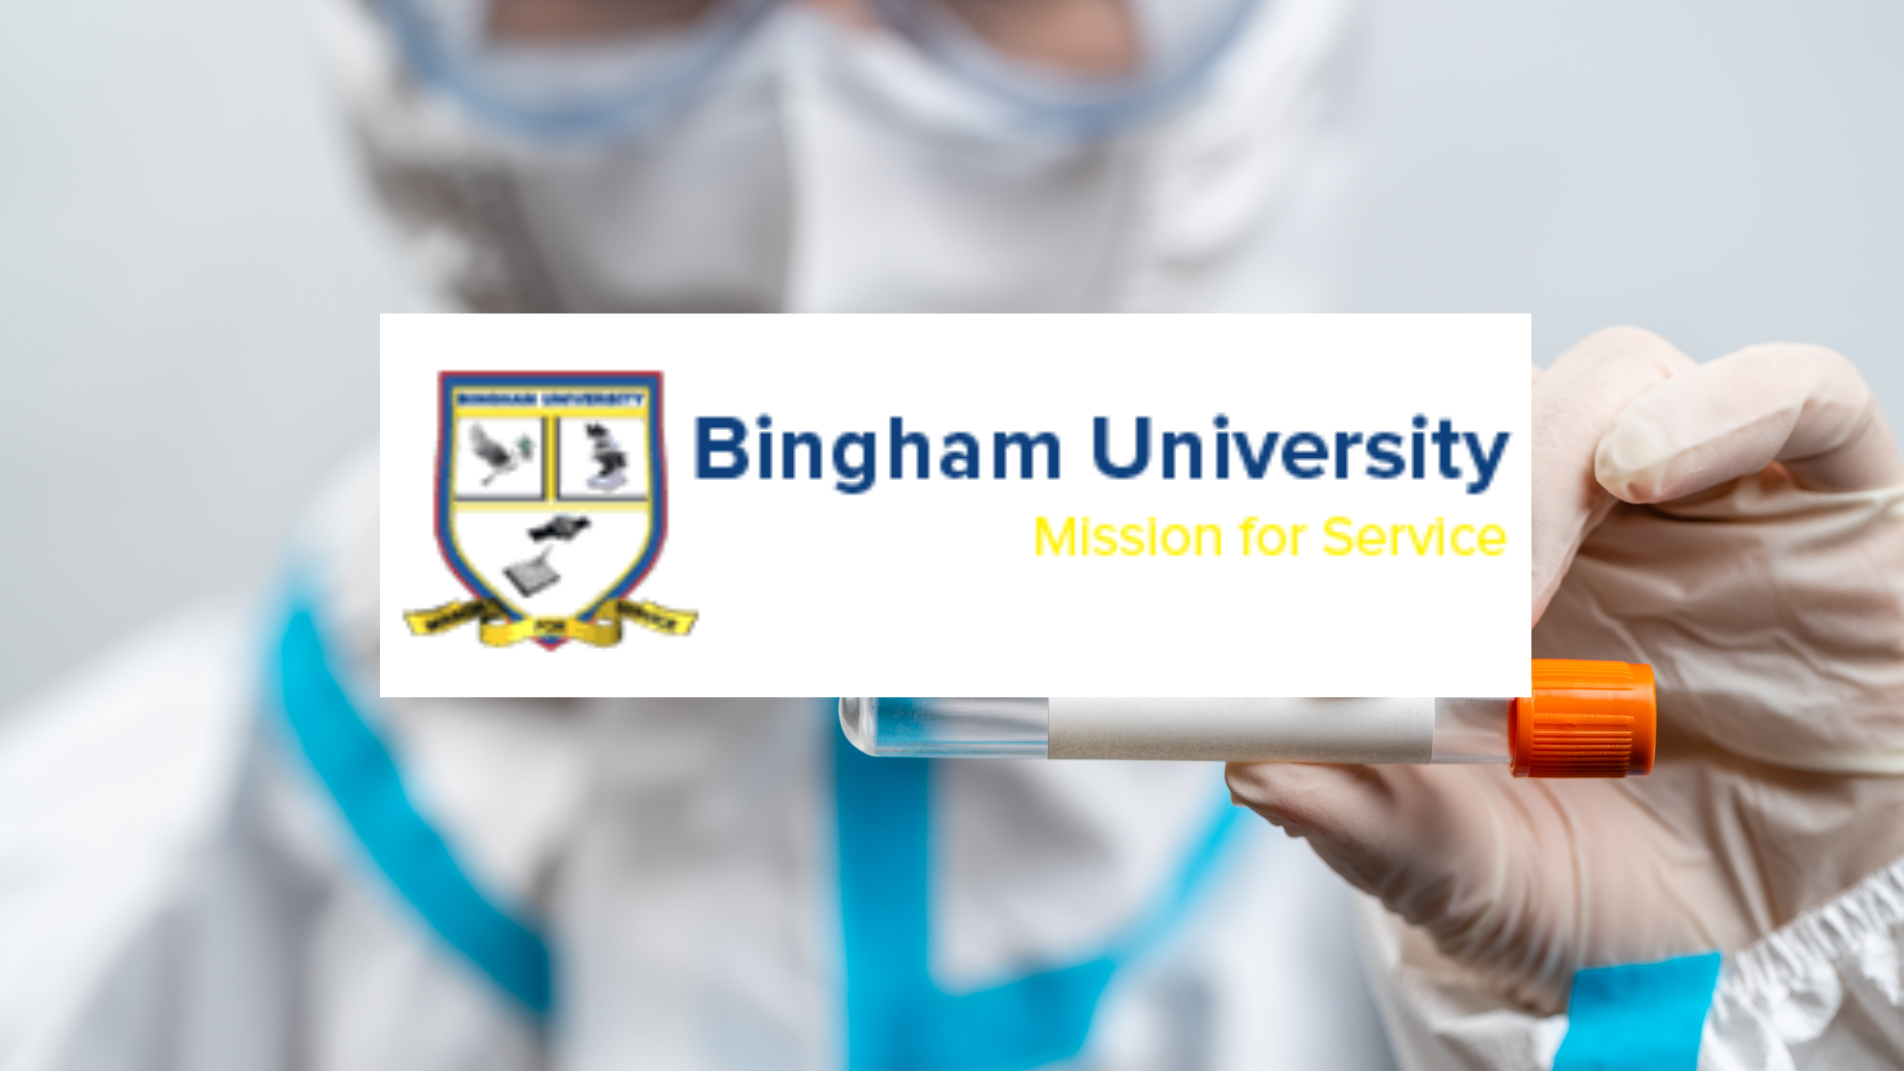 Bingham University Helps Bridge Manpower Gap in Medical Sector as it Inducts 80 Doctors